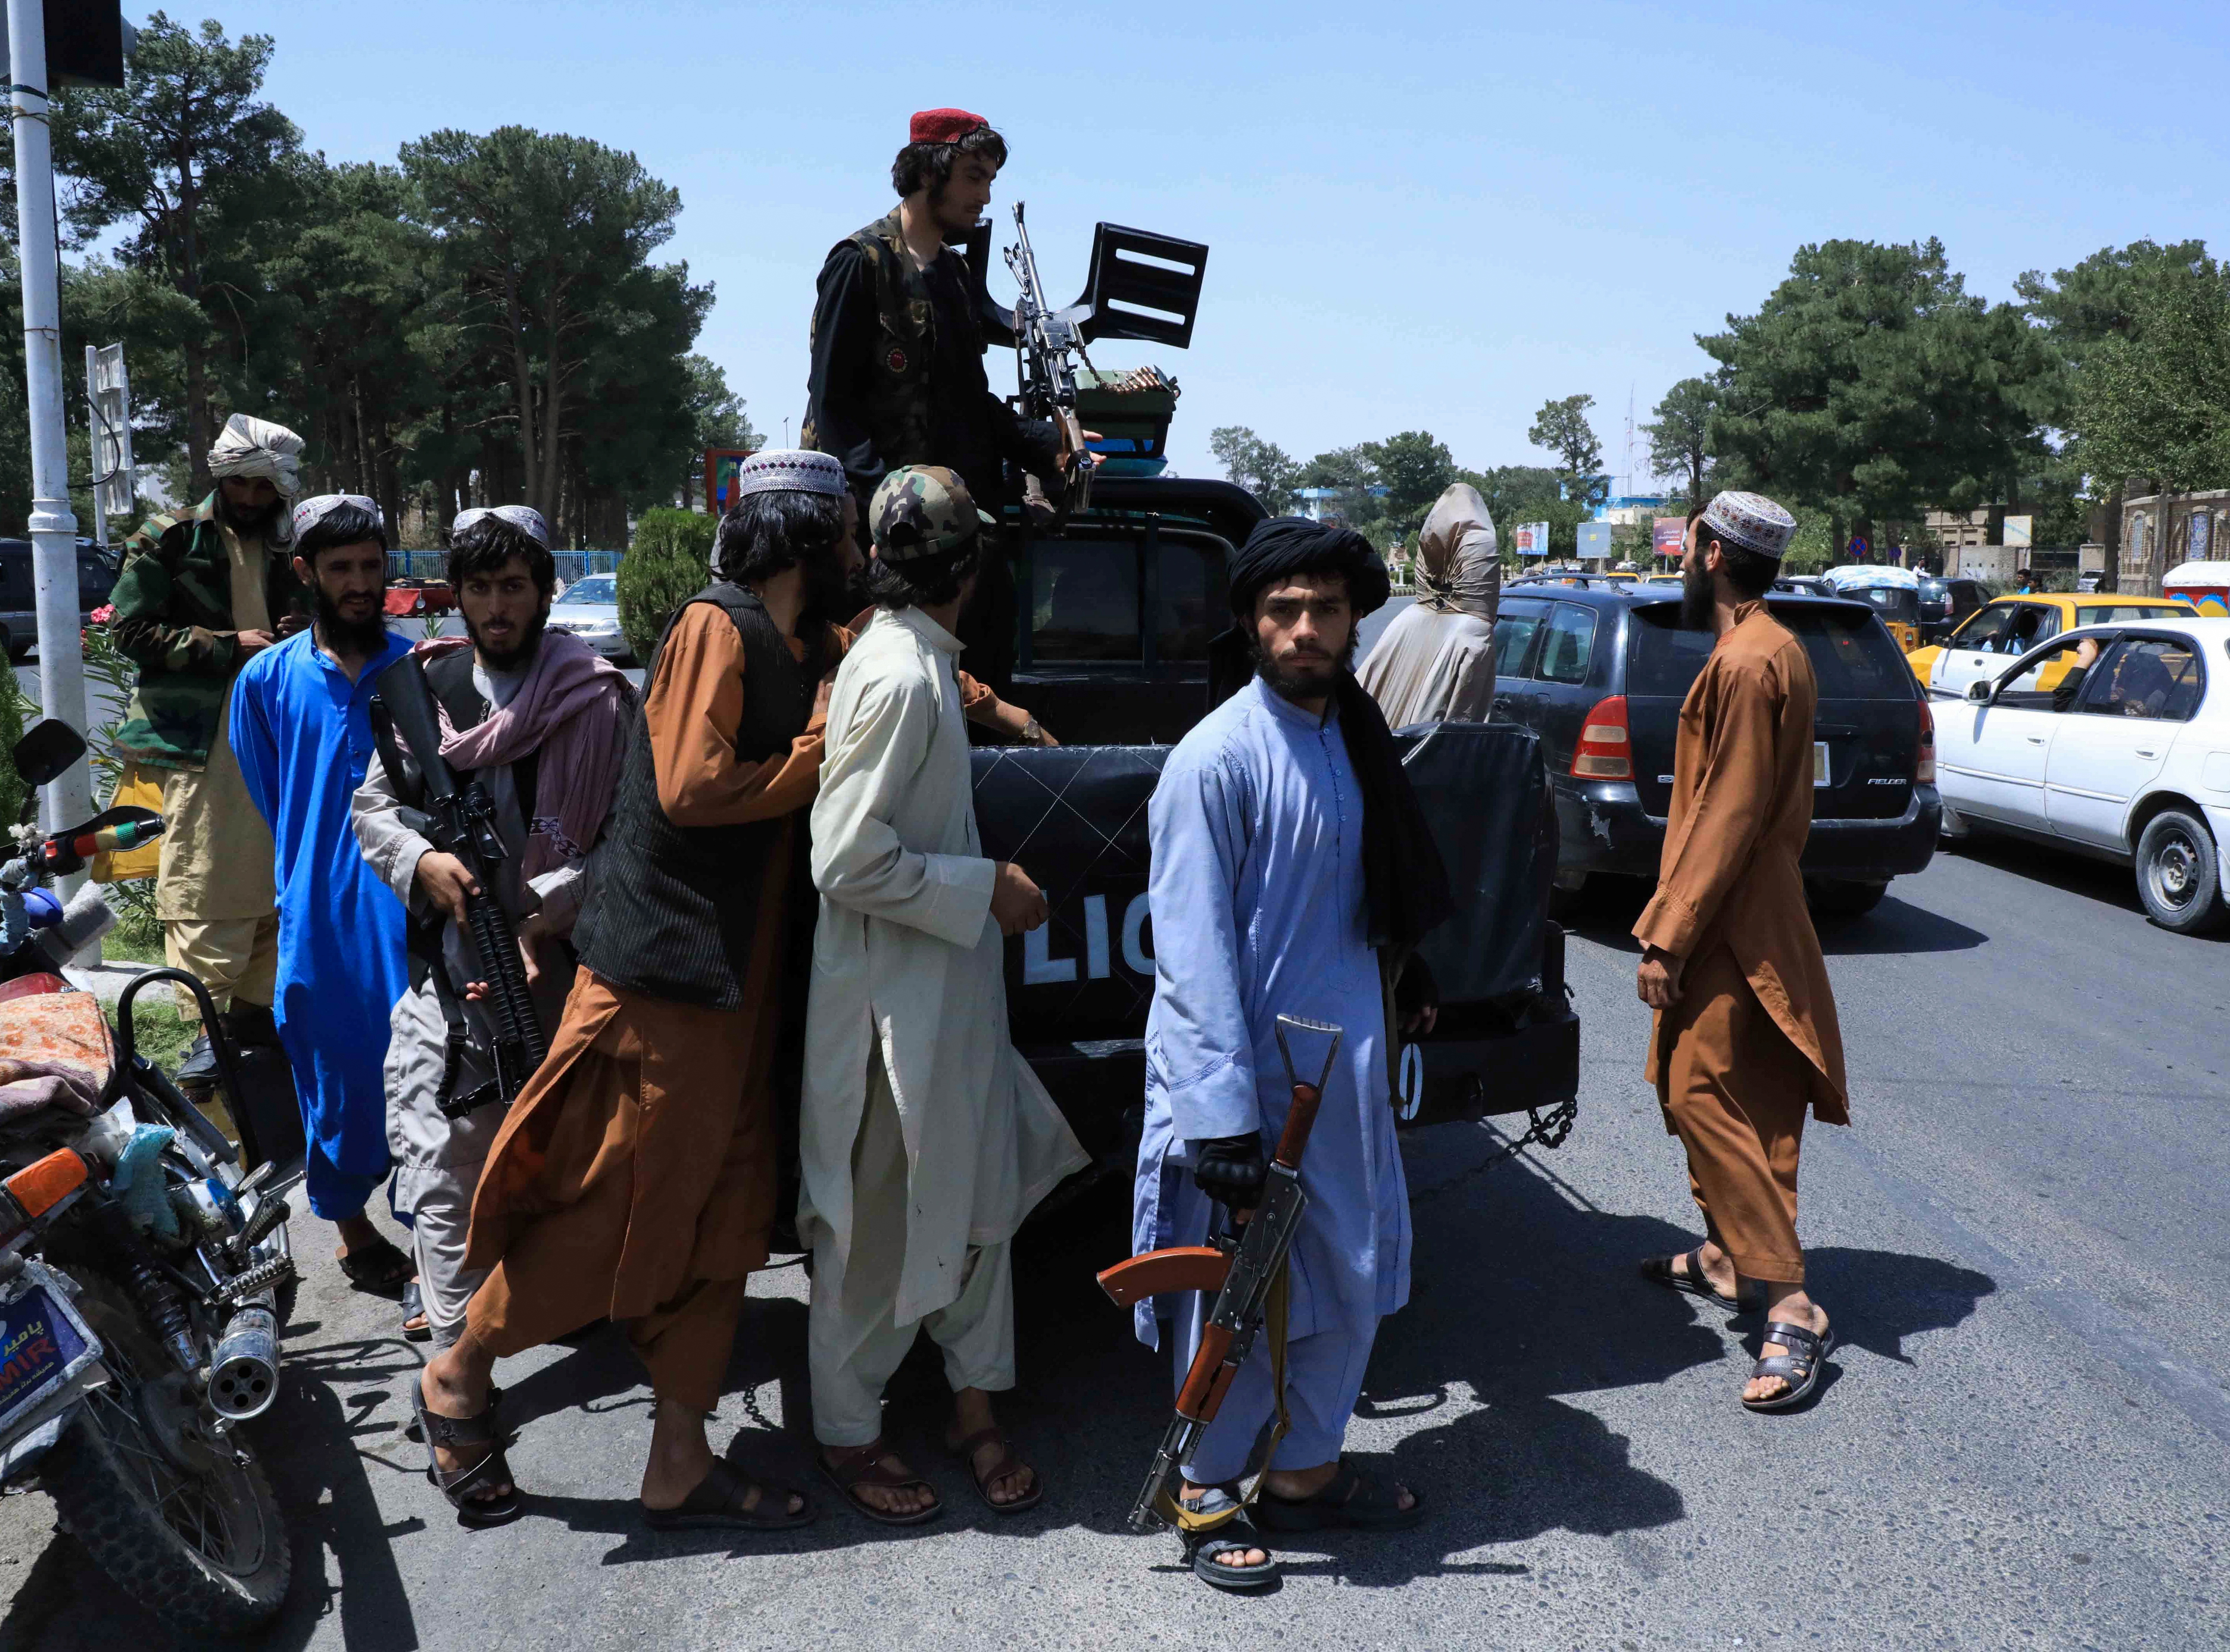 Taliban forces patrol a street in Herat, Afghanistan August 14, 2021. REUTERS/Stringer